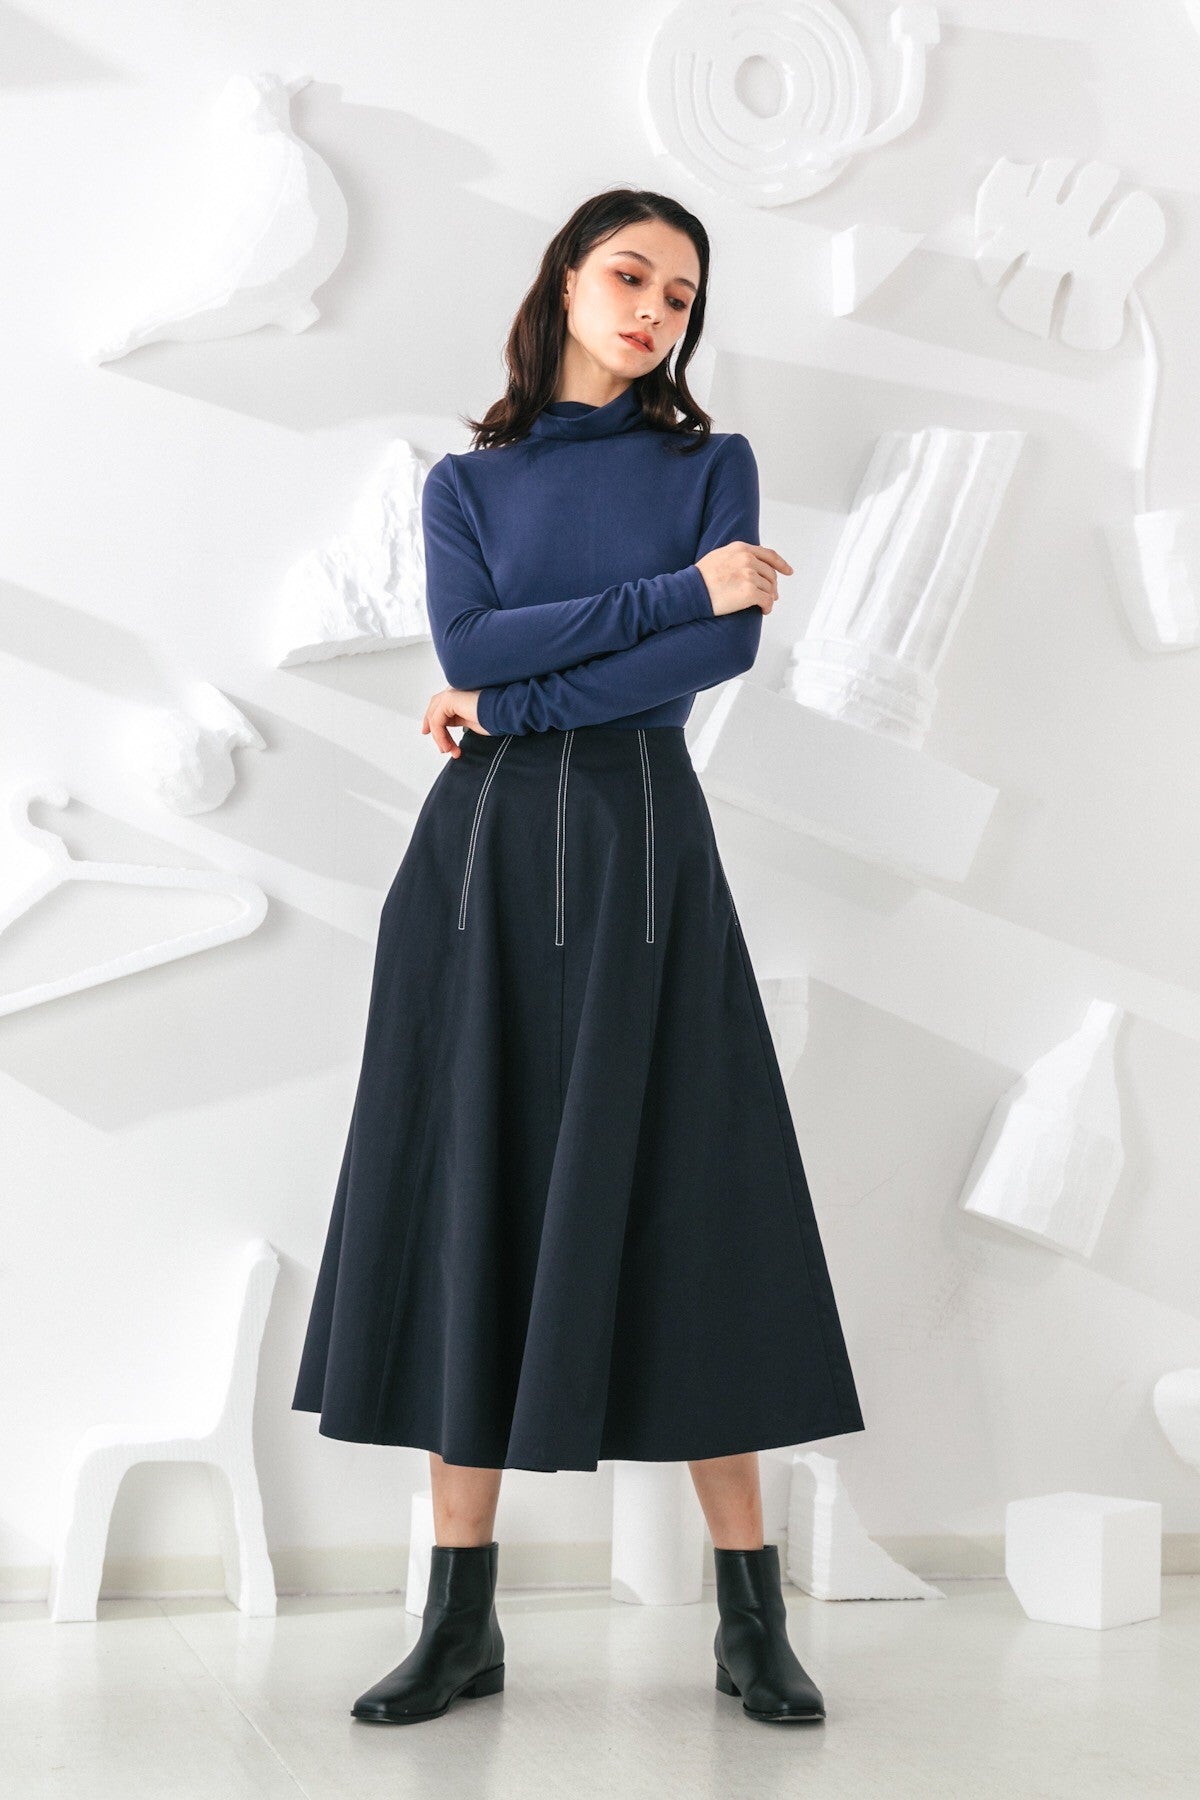 SKYE San Francisco SF shop ethical modern minimalist quality women clothing fashion Jeanne Midi Skirt blue 6